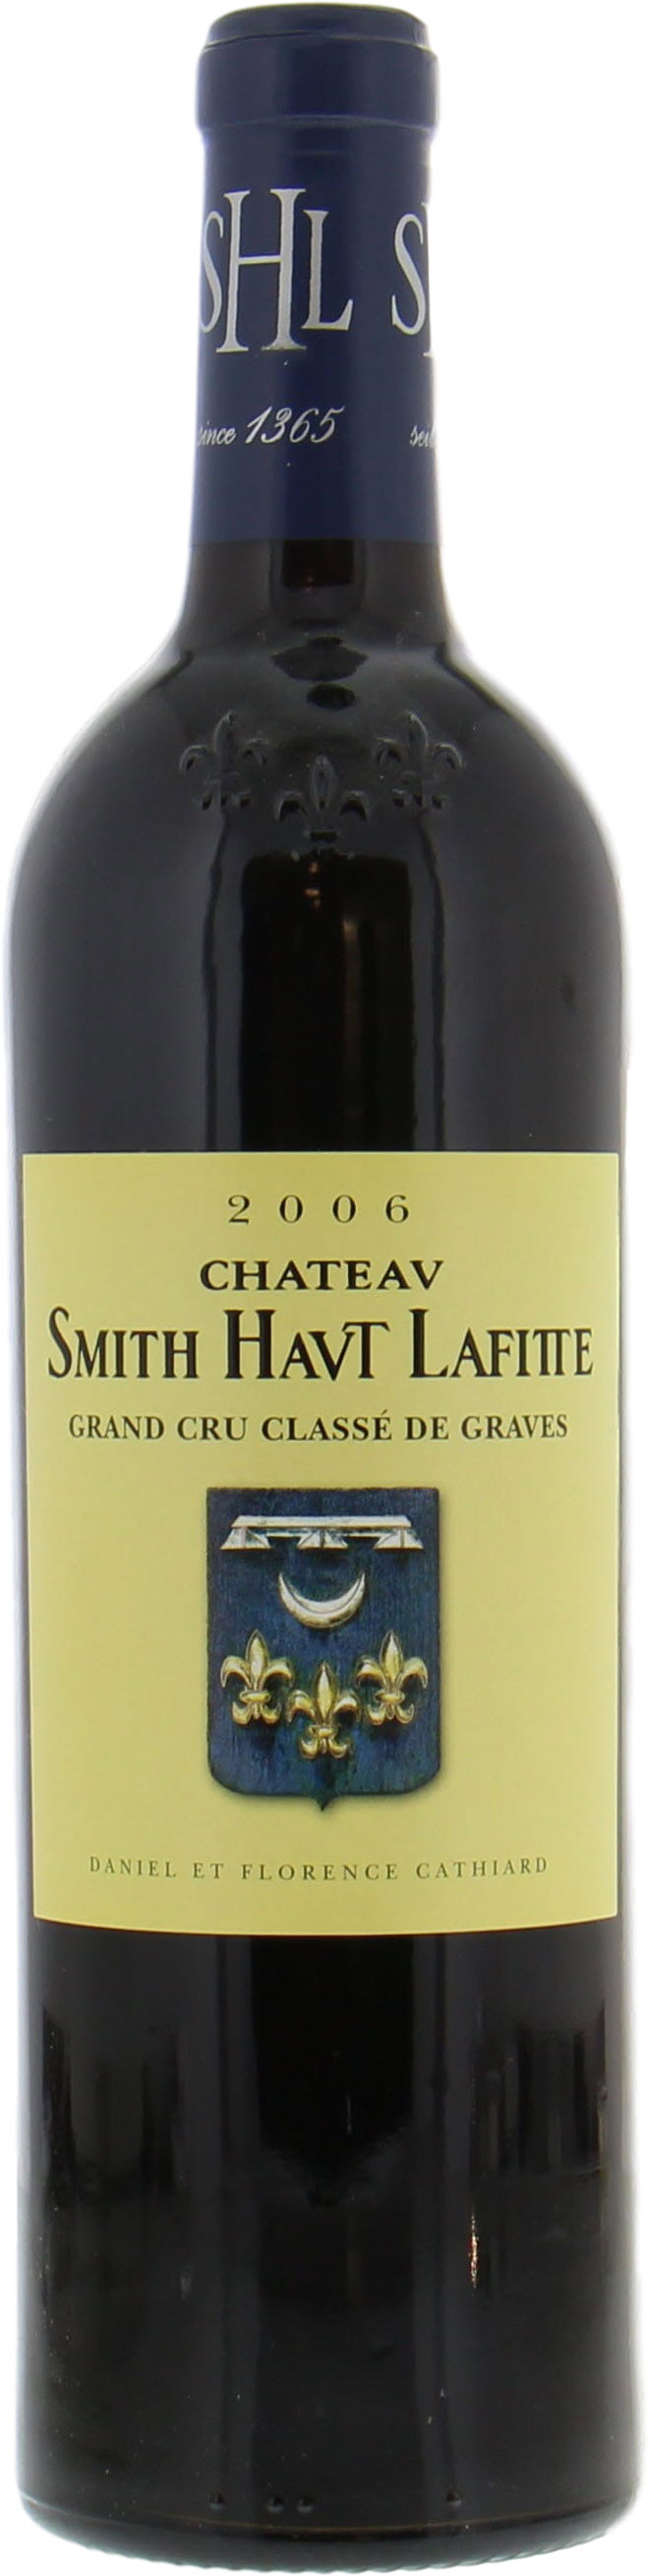 Chateau Smith-Haut-Lafitte Rouge - Chateau Smith-Haut-Lafitte Rouge 2006 perfect